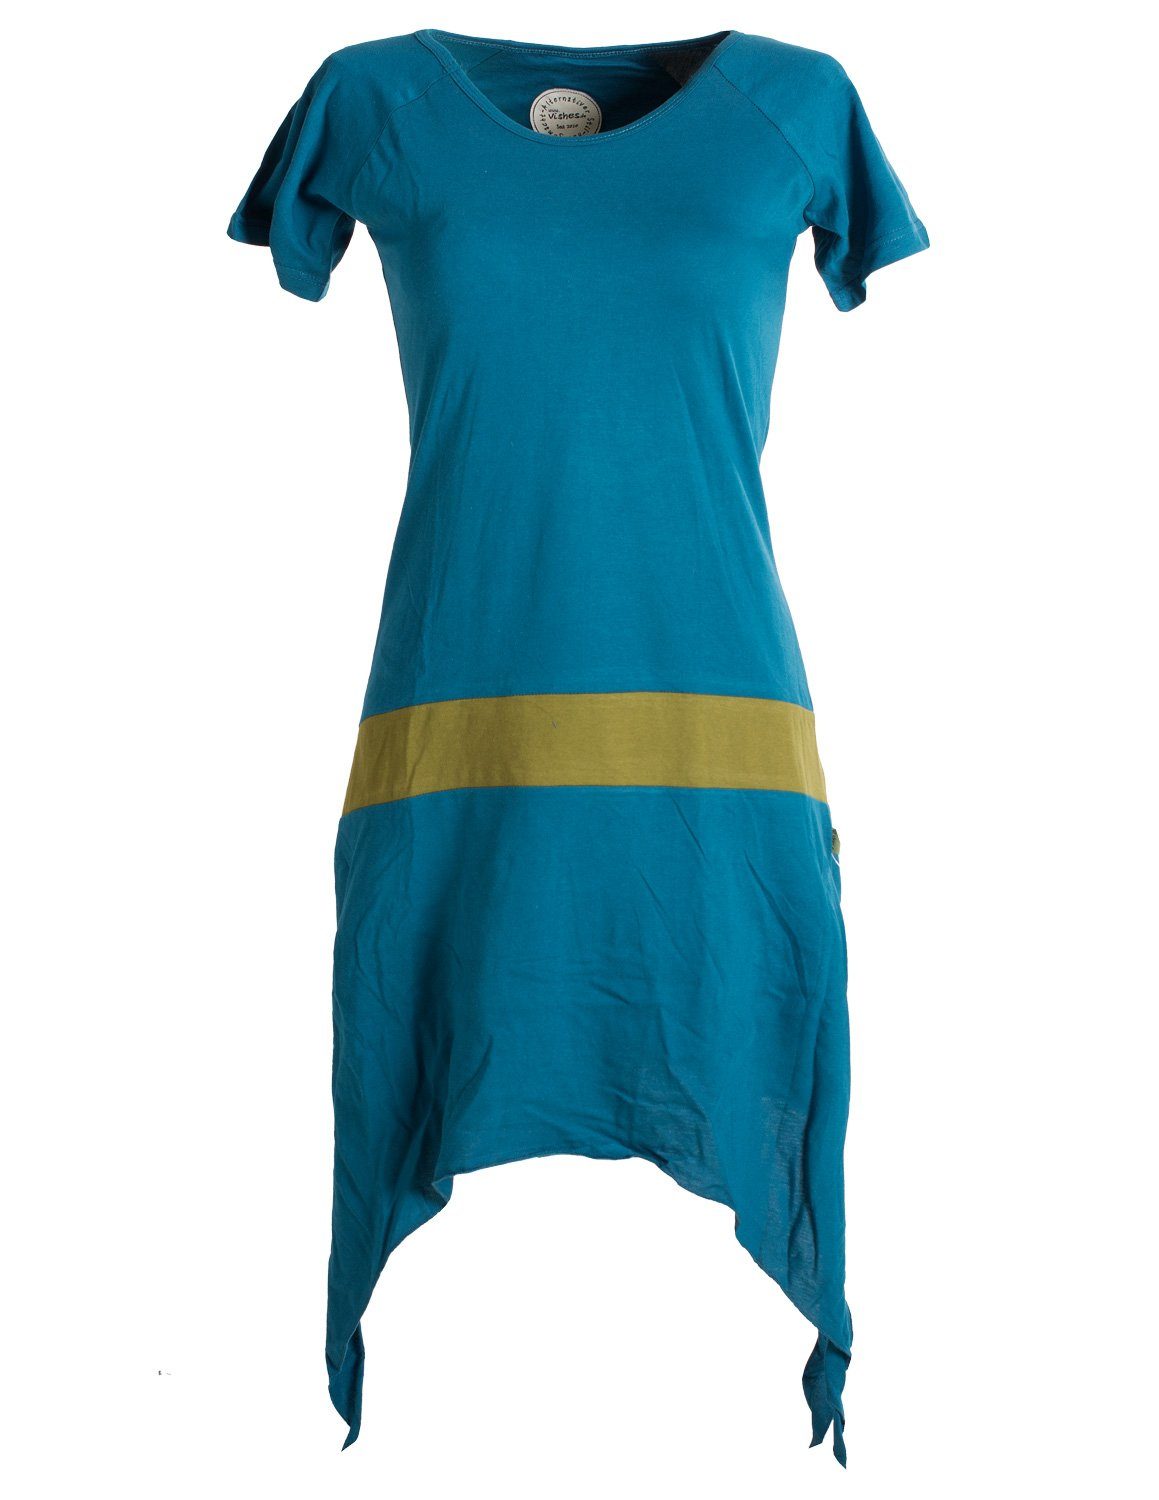 Vishes Sommerkleid Einfaches kurzärmliges Zipfelkleid aus Baumwolle Tunika, Longshirt, Hippie Style türkis